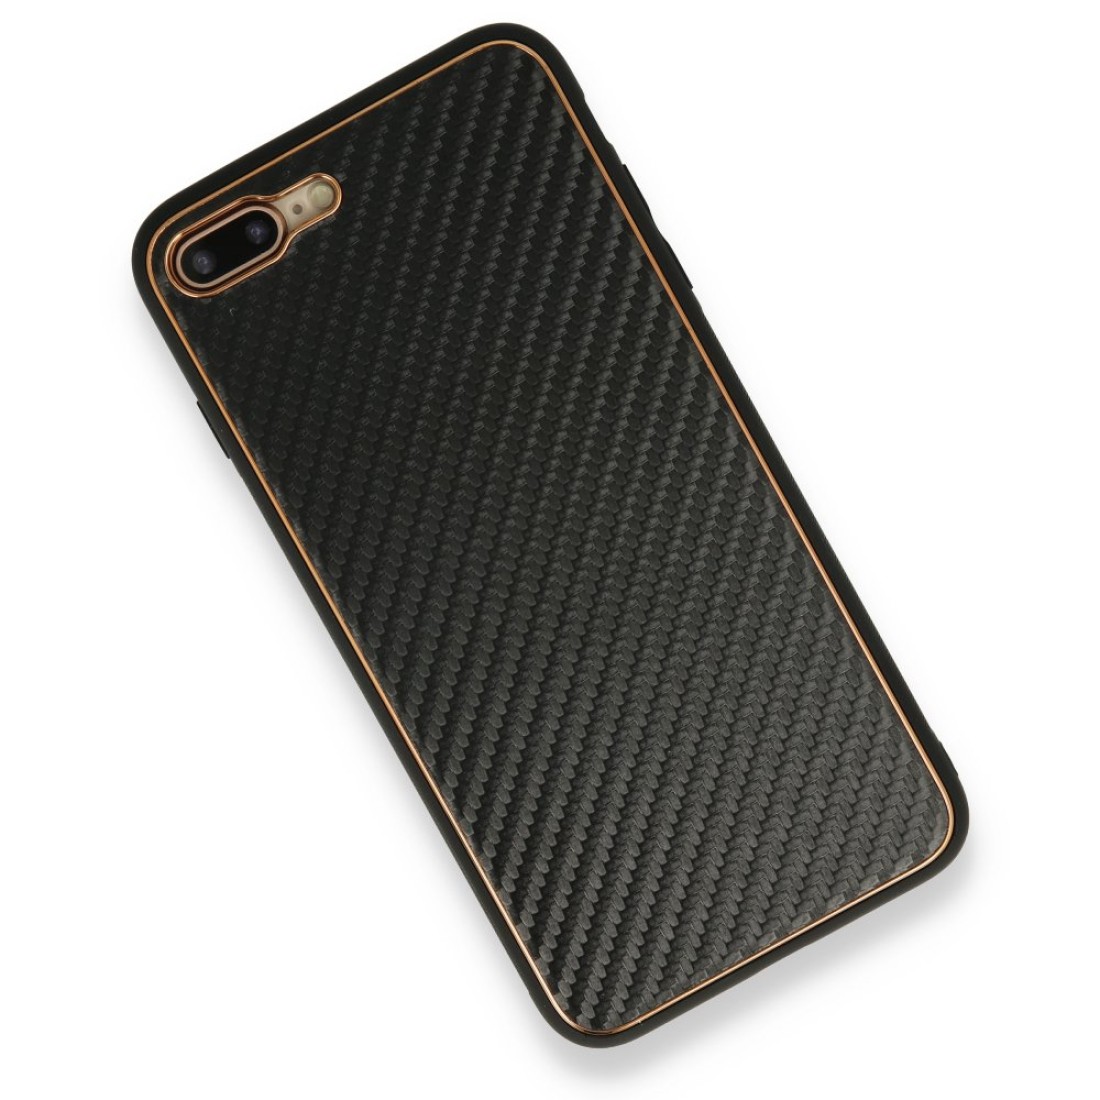 Apple iPhone 7 Plus Kılıf Coco Karbon Silikon - Siyah